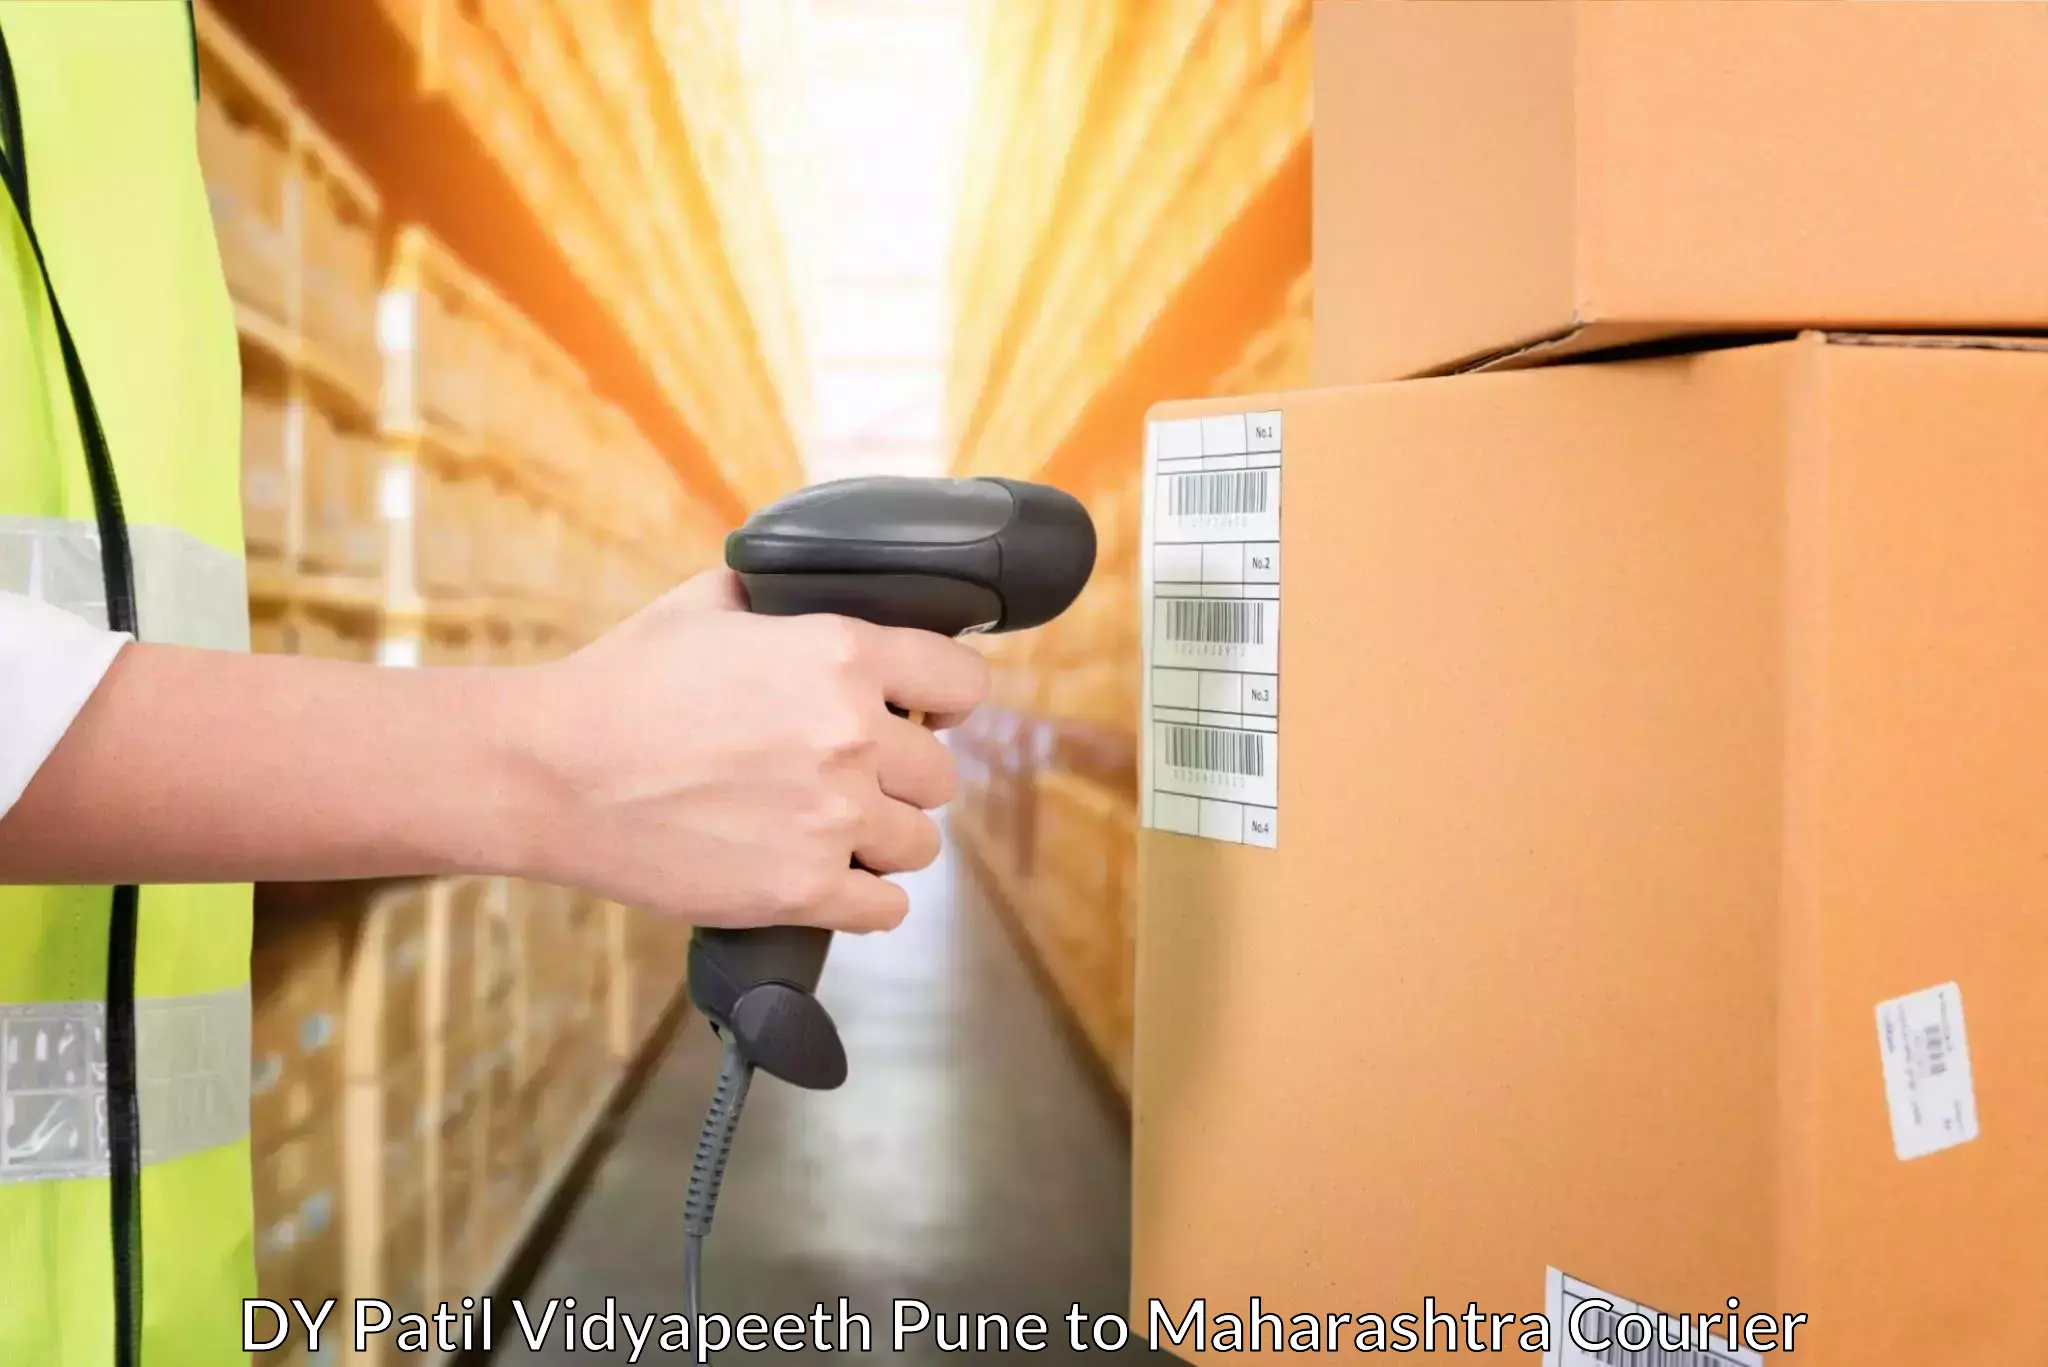 Overnight delivery DY Patil Vidyapeeth Pune to Jalgaon Jamod